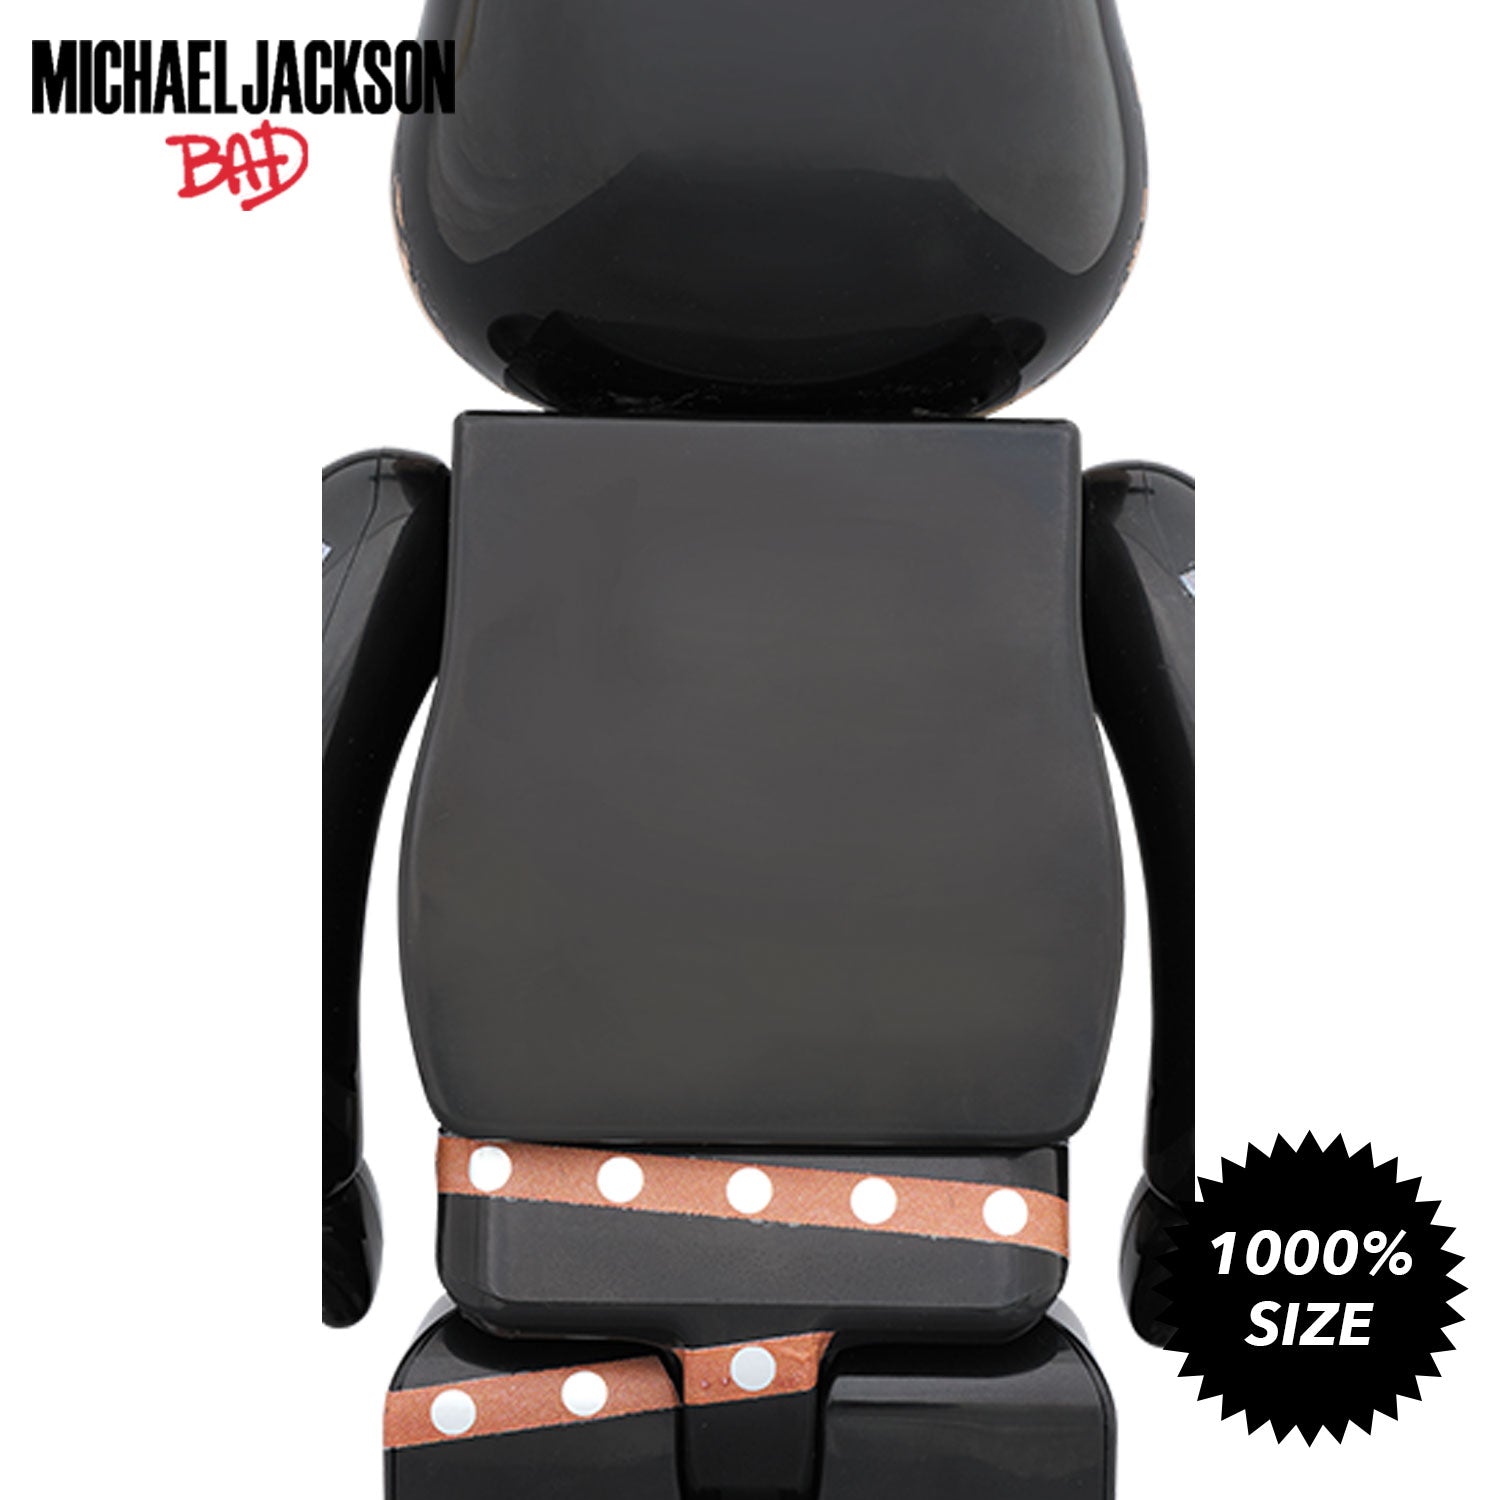 Michael Jackson BAD 1000% Bearbrick by Medicom Toy